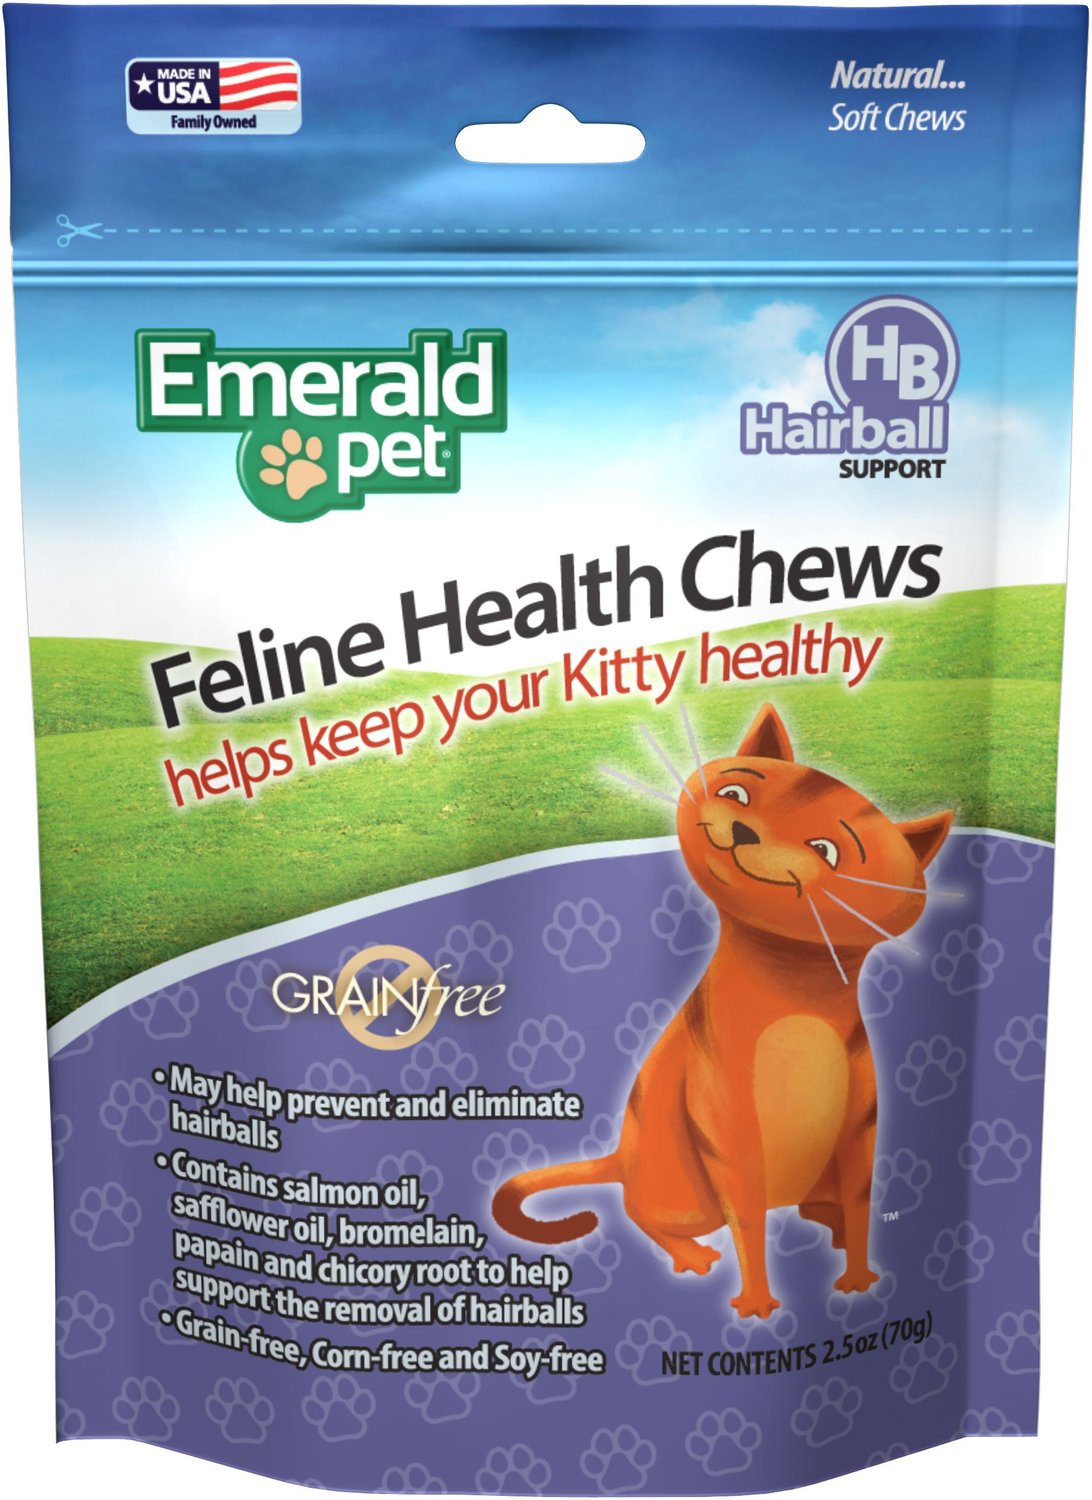 EMERALD PET Hairball Support GrainFree Cat Soft Chews, 2.5oz bag